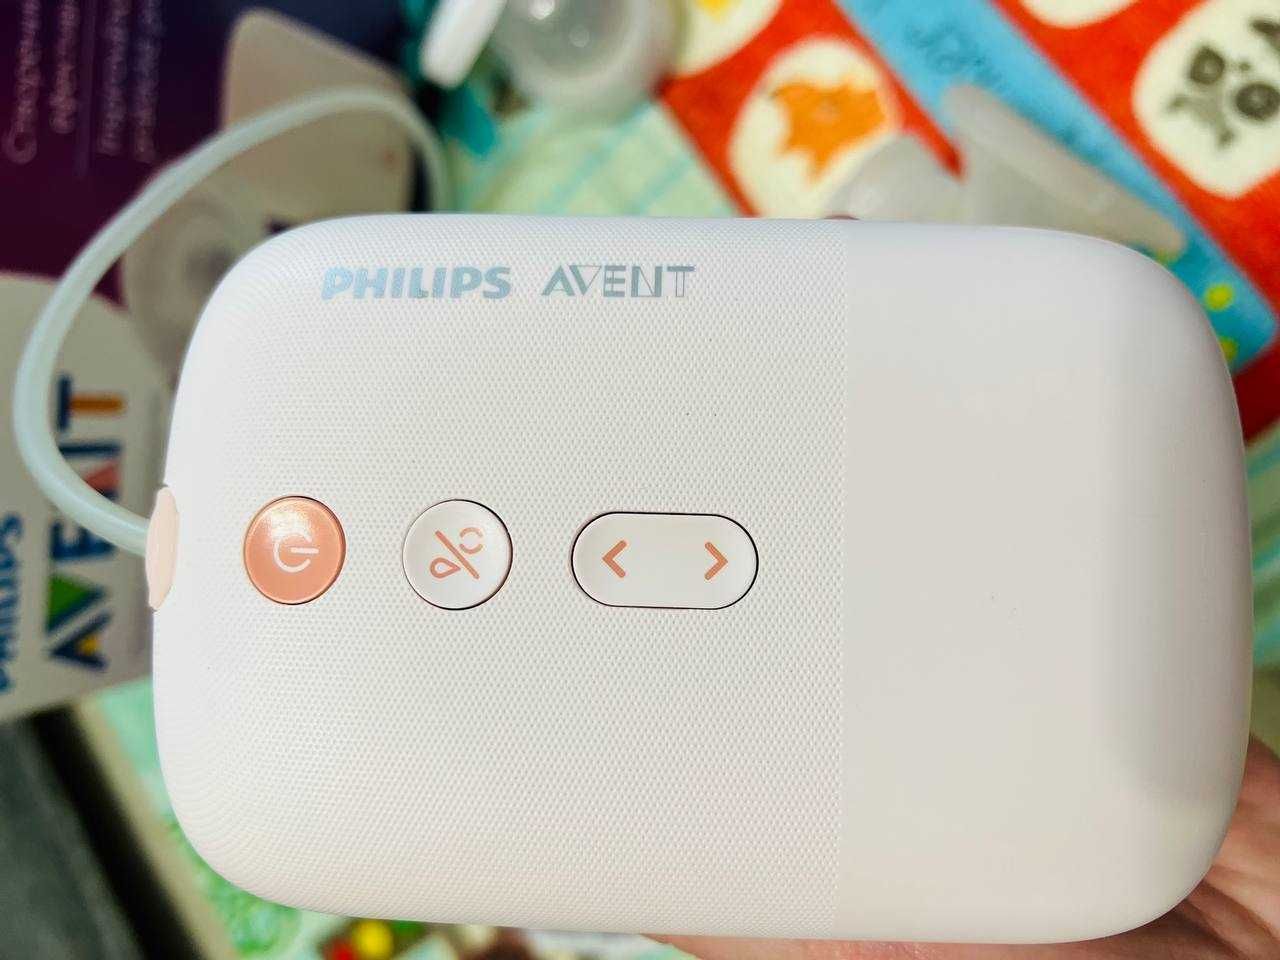 Philips Avent електричний молоковідсмоктувач